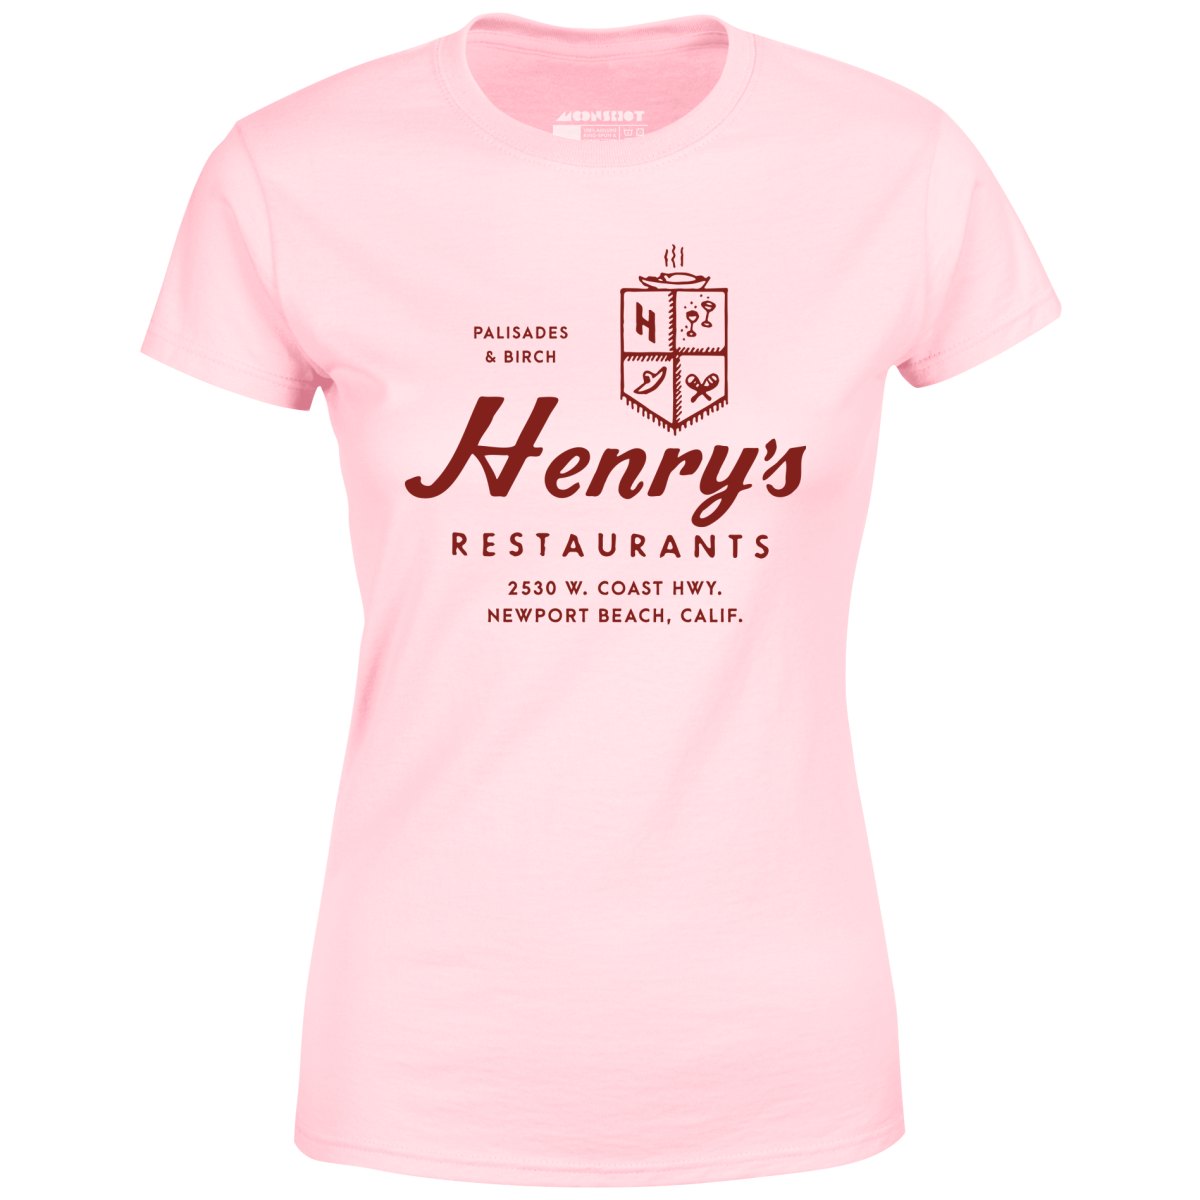 Henry's - Newport Beach, CA - Vintage Restaurant - Women's T-Shirt